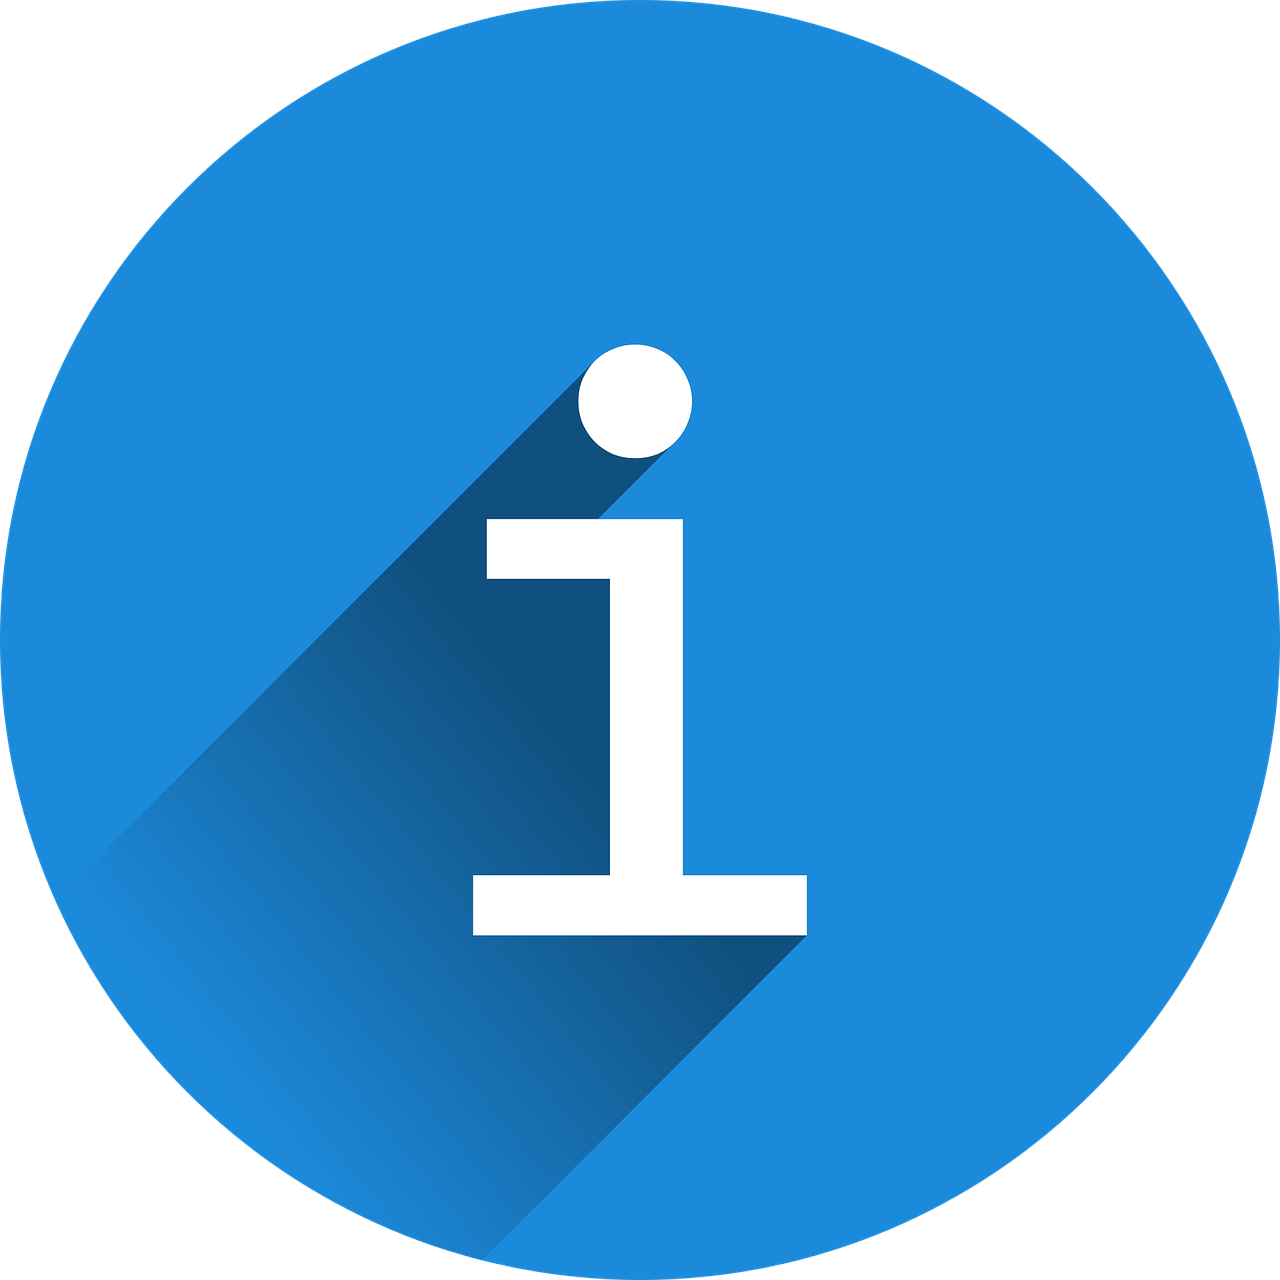 11information-1481584_1280-pixabay.